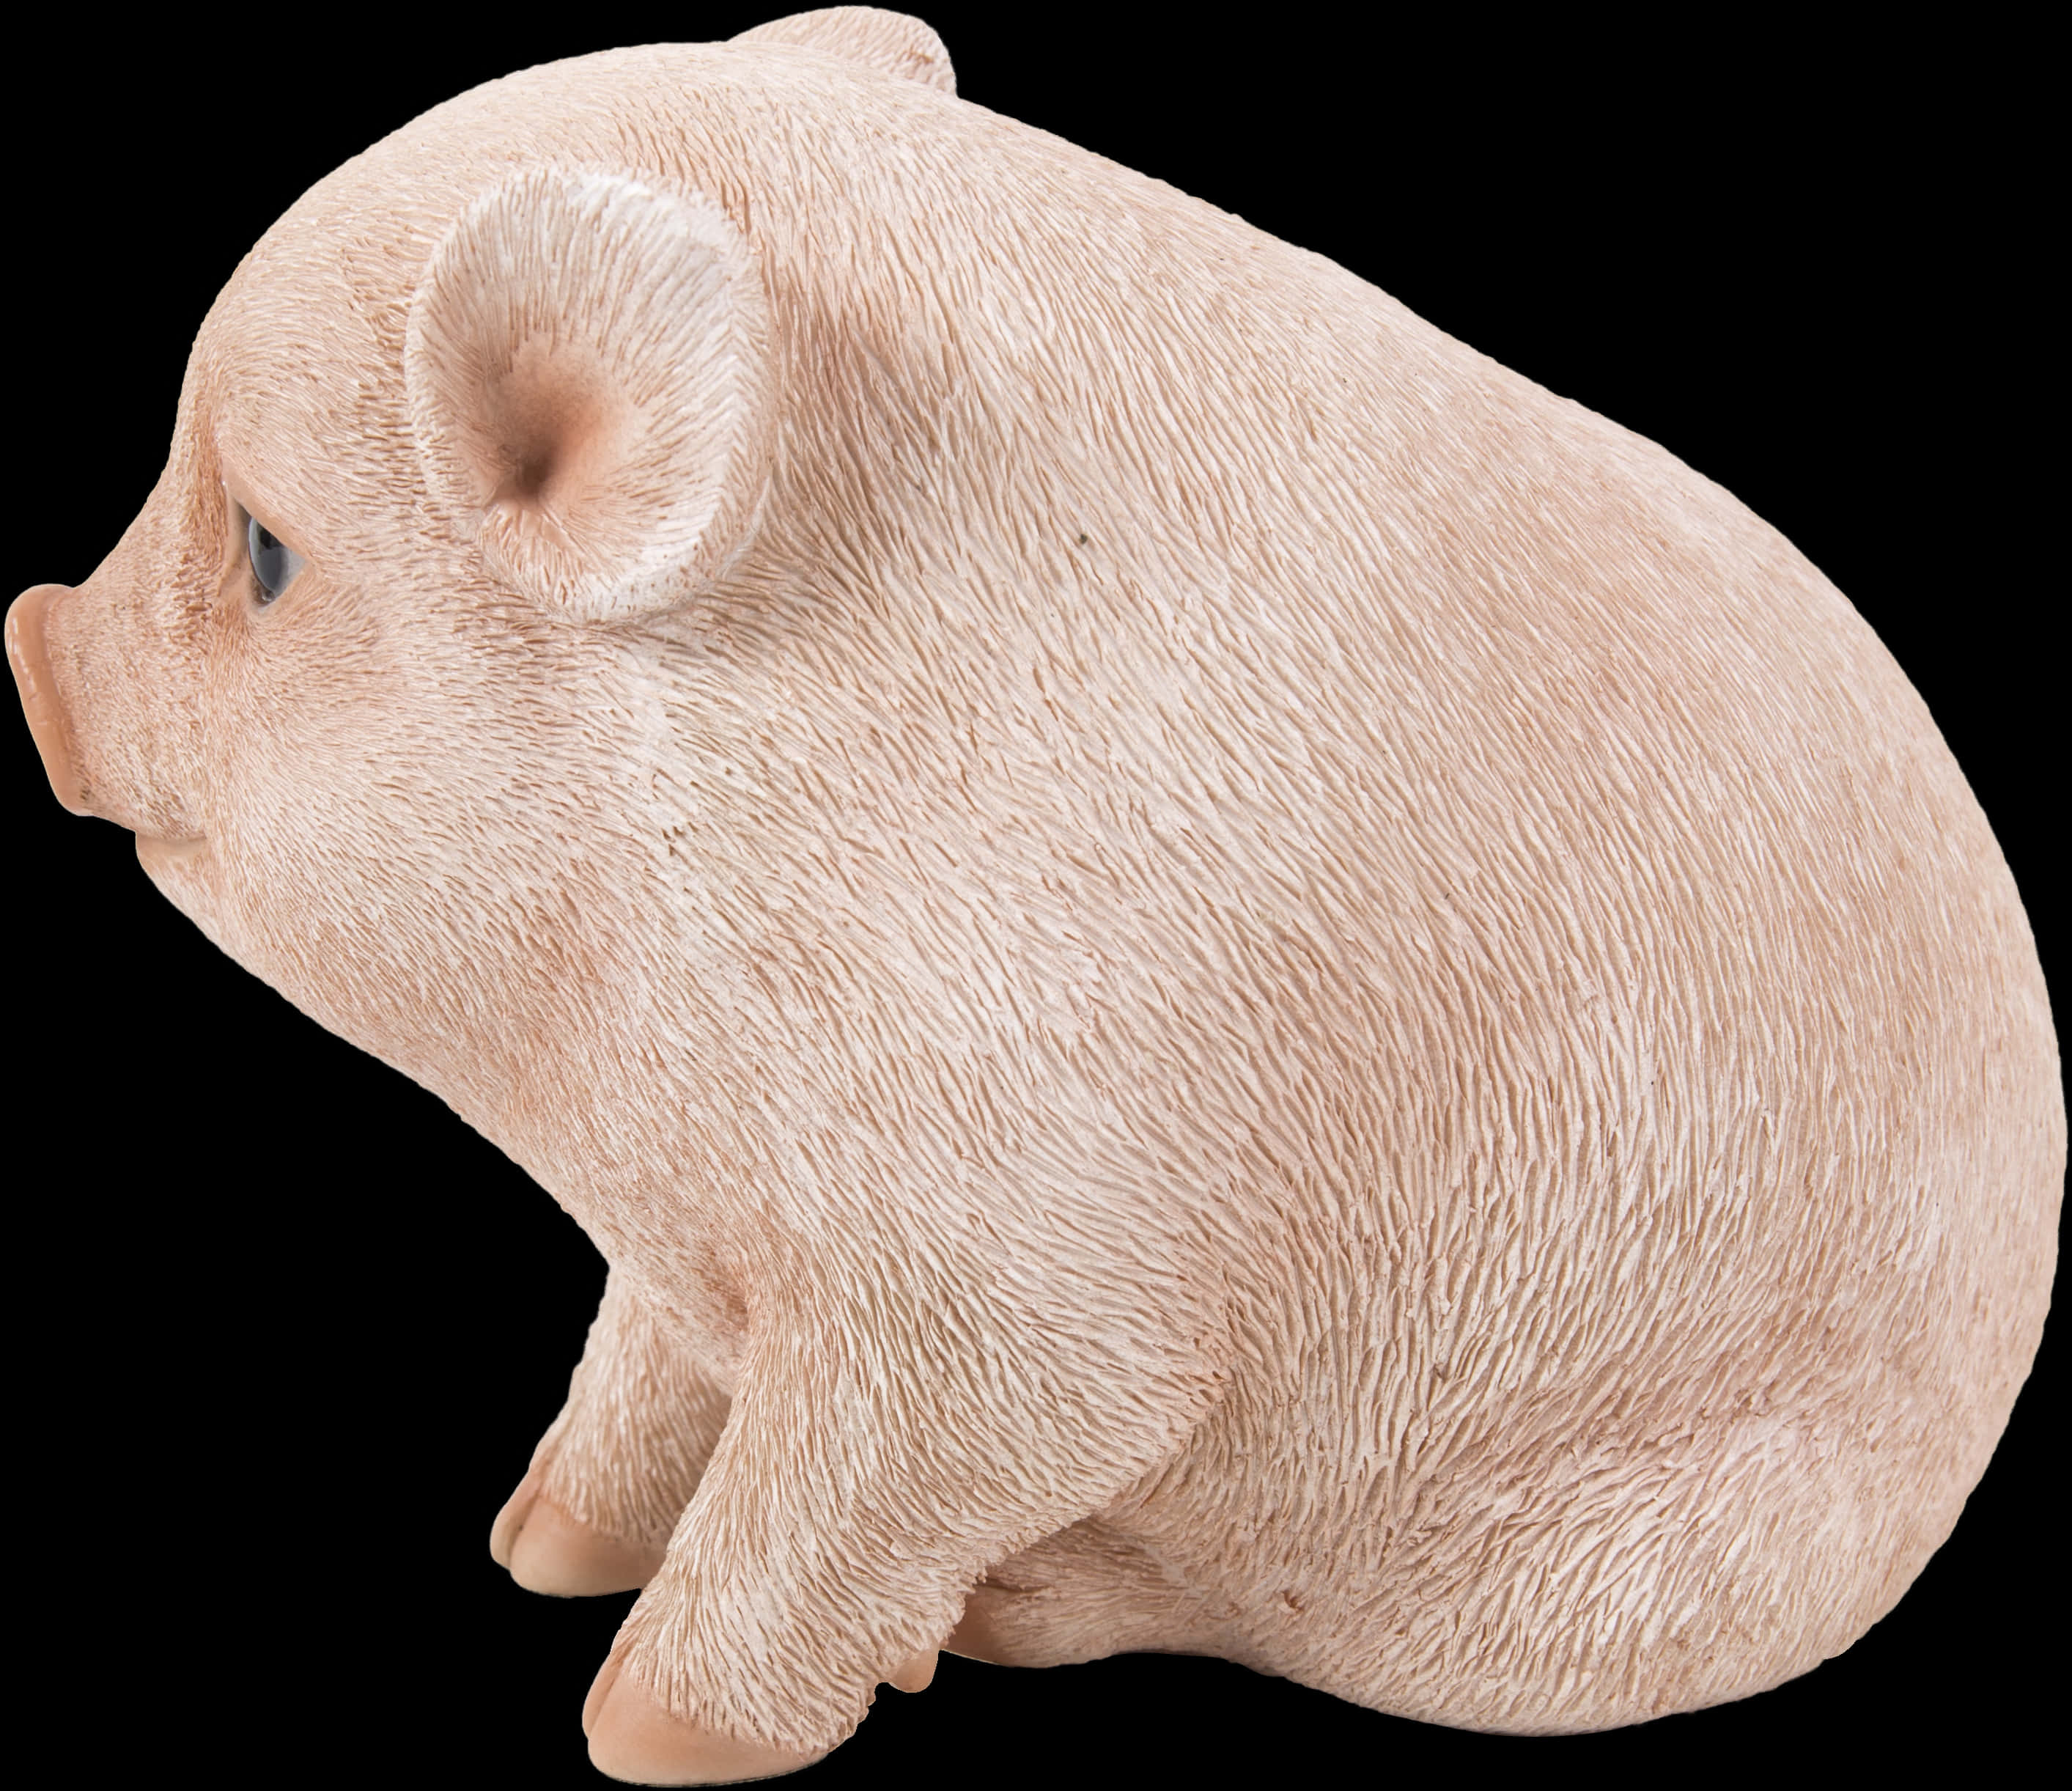 A Close Up Of A Pig